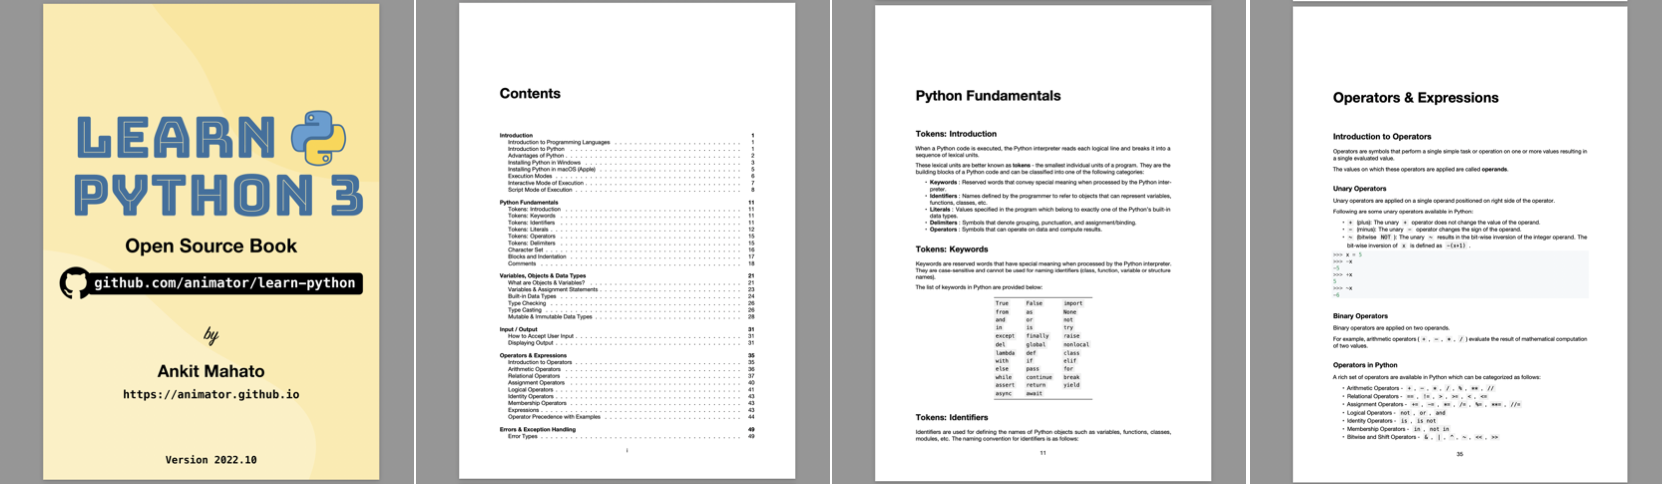 Learn Python 3 PDF